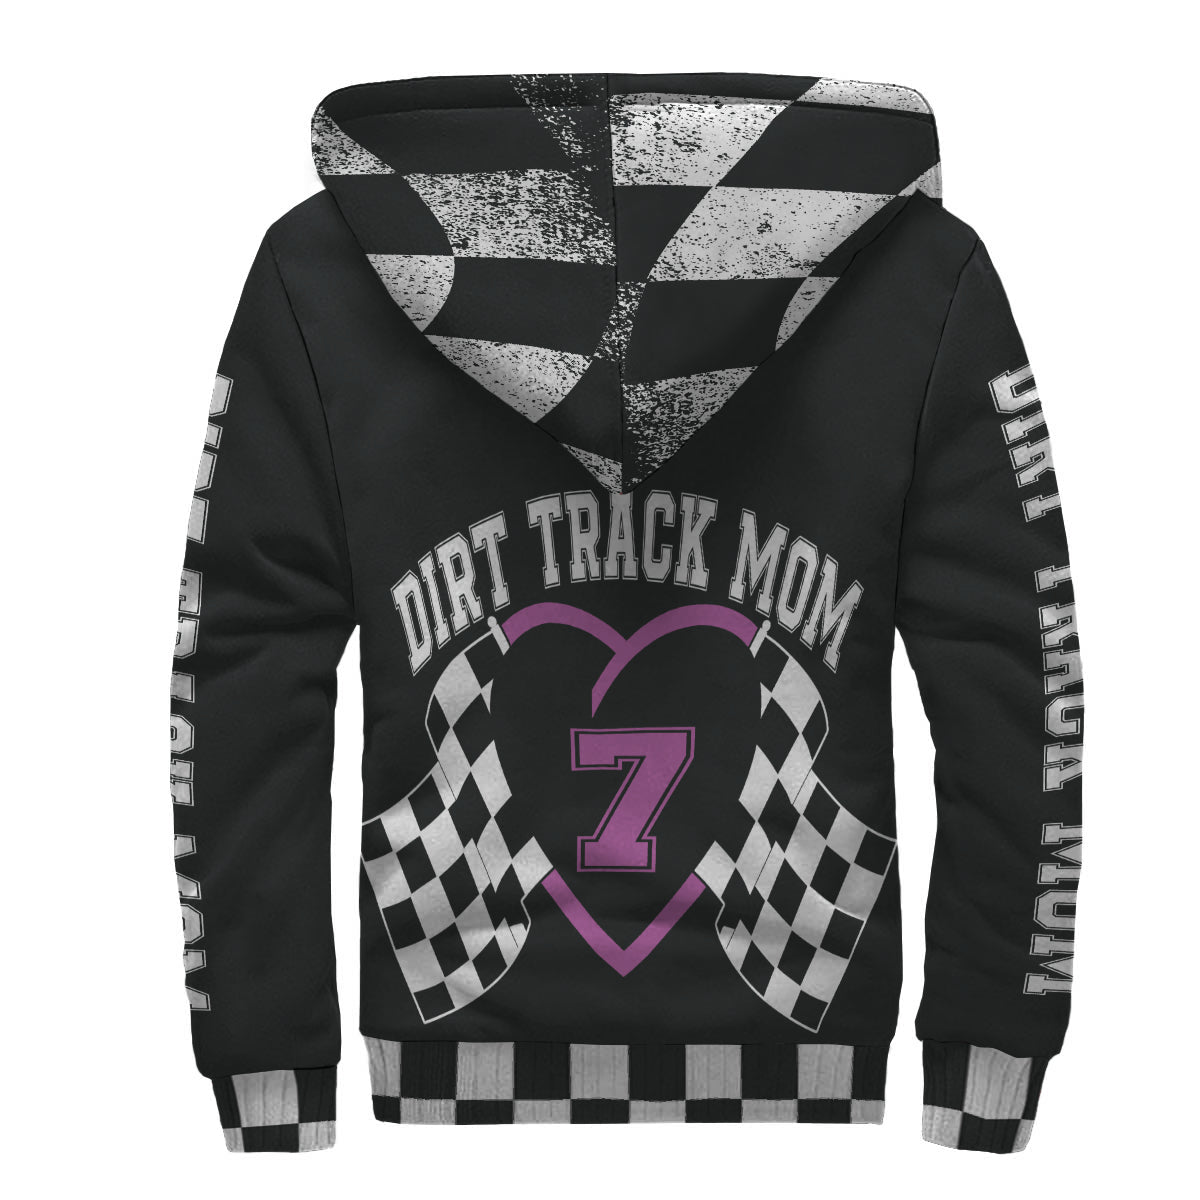 dirt track mom sherpa jacket